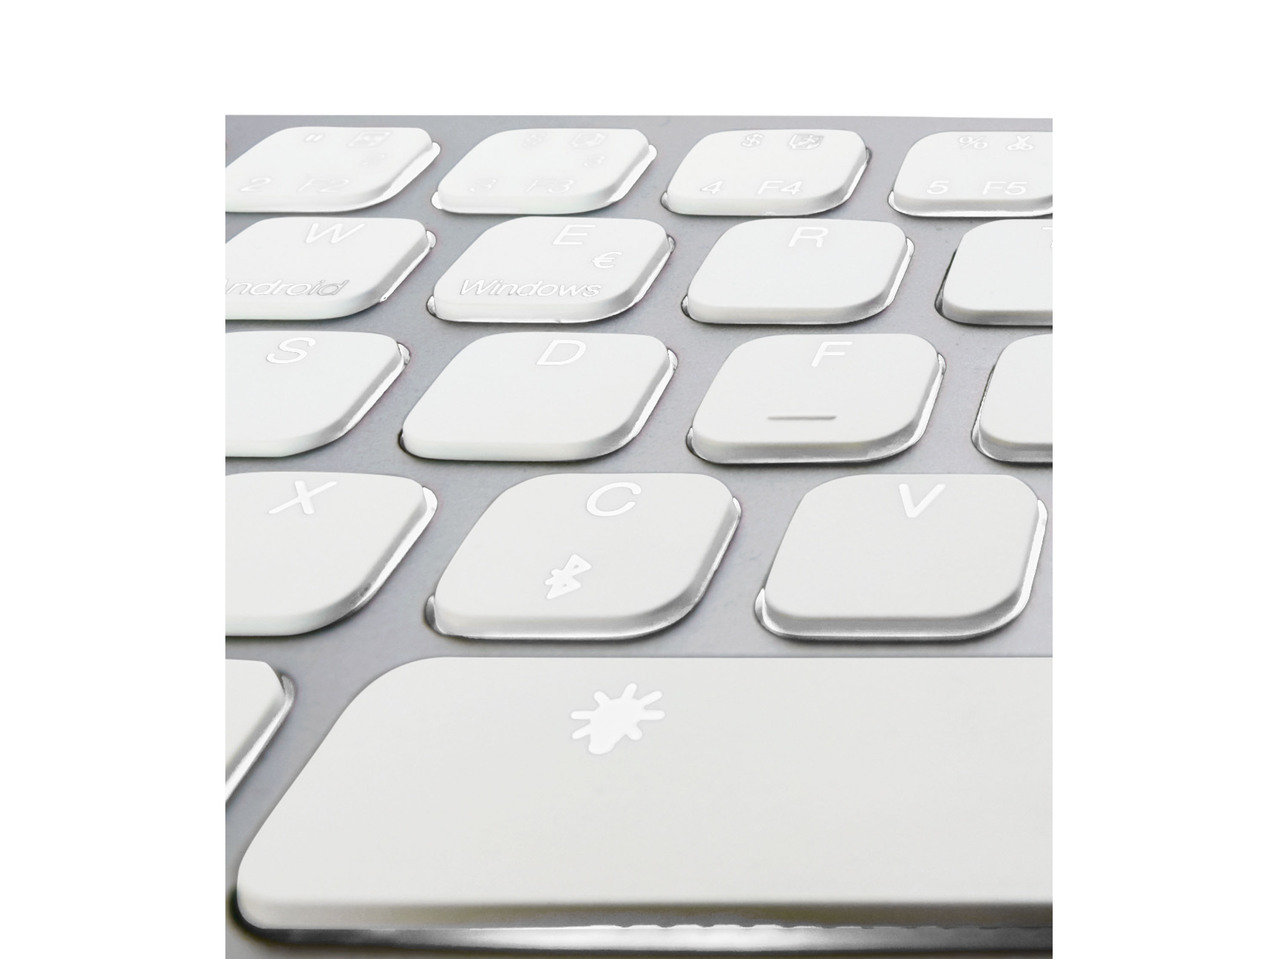 Bluetooth Keyboard with Backlit Display